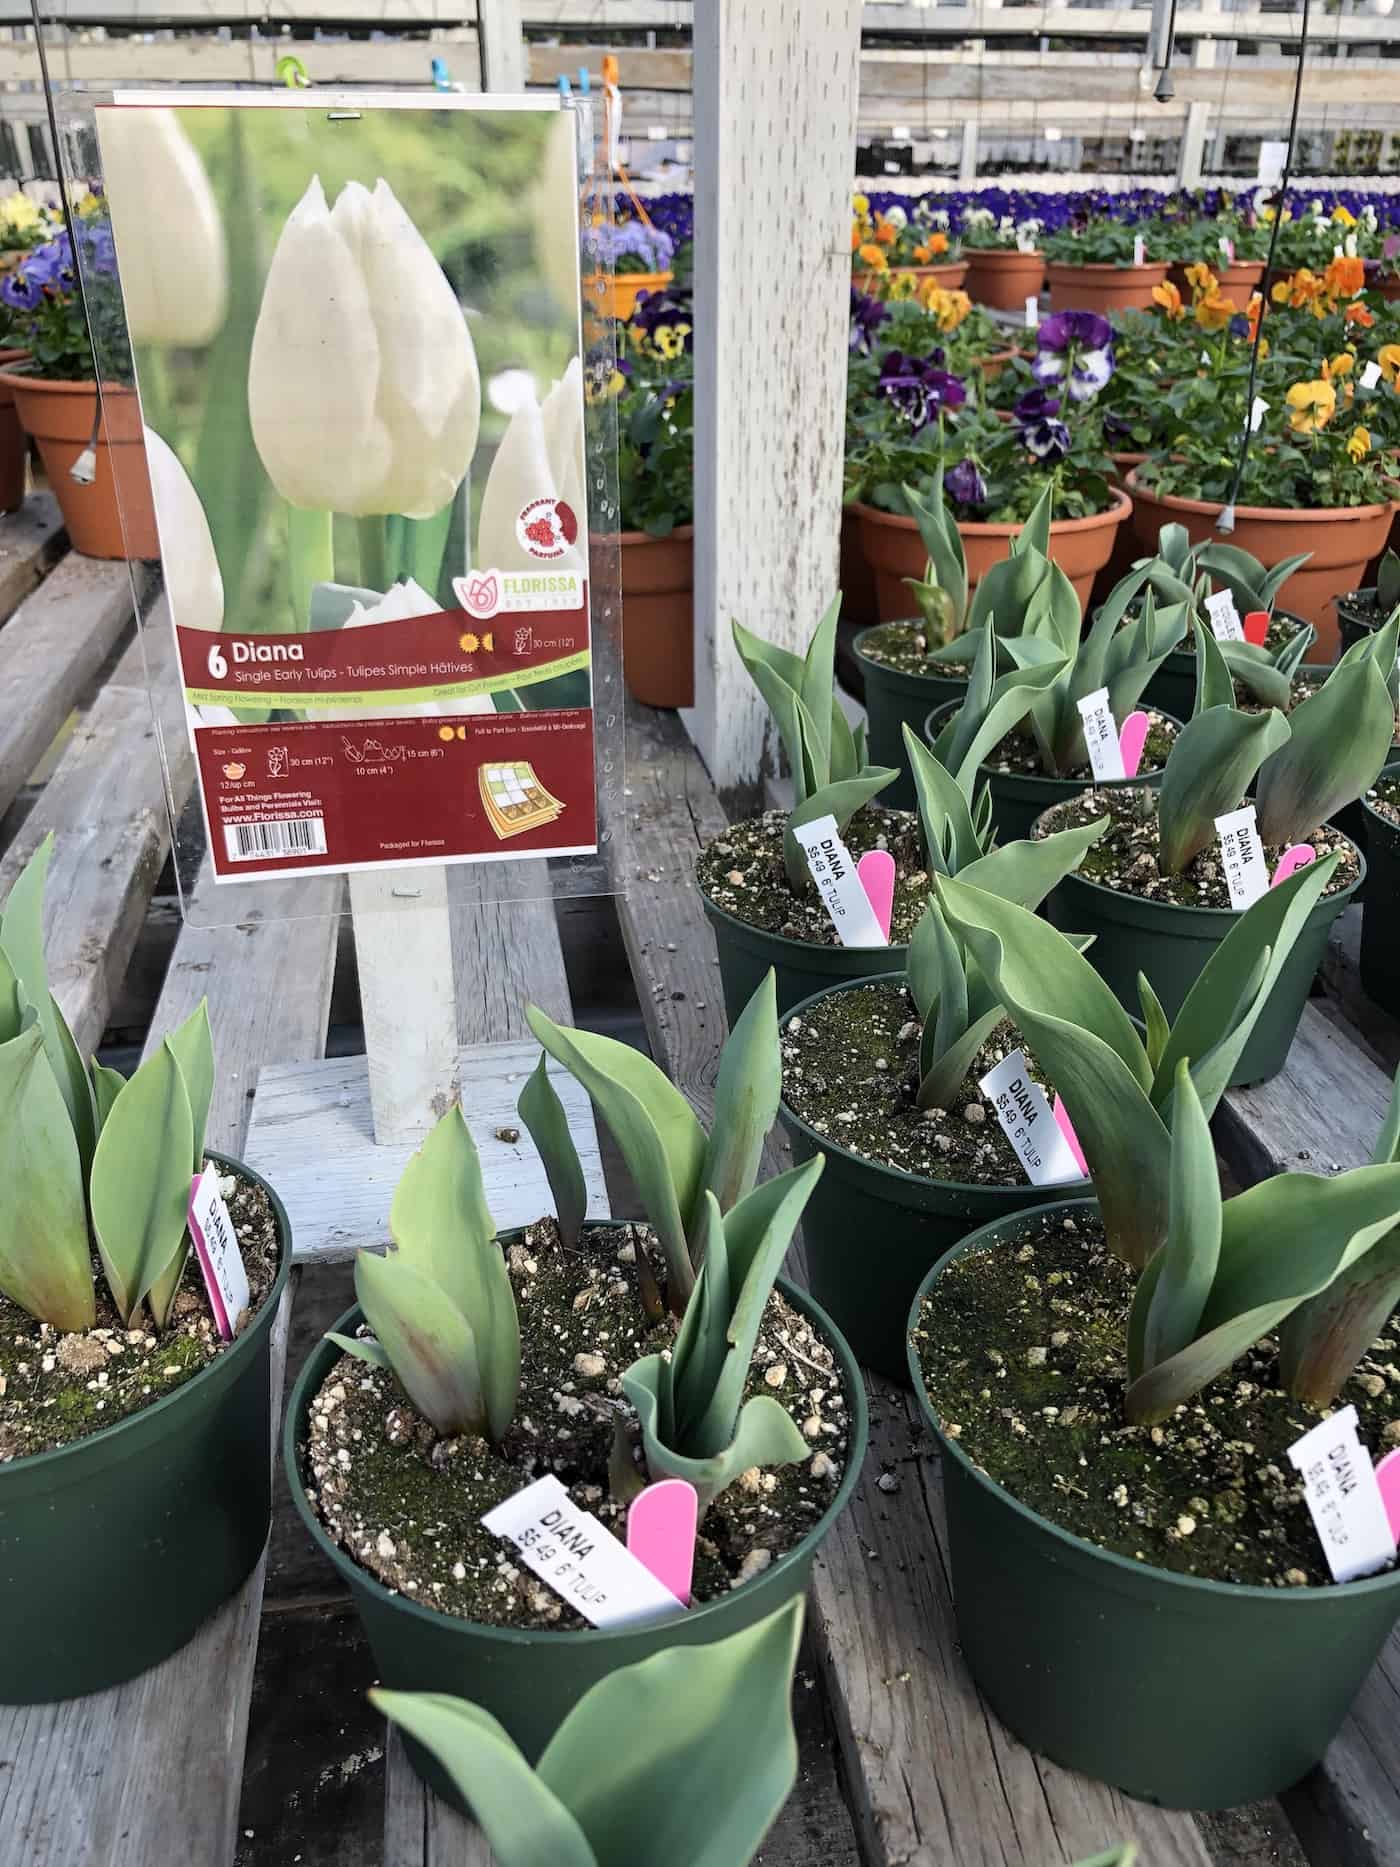 Diana white tulip plants